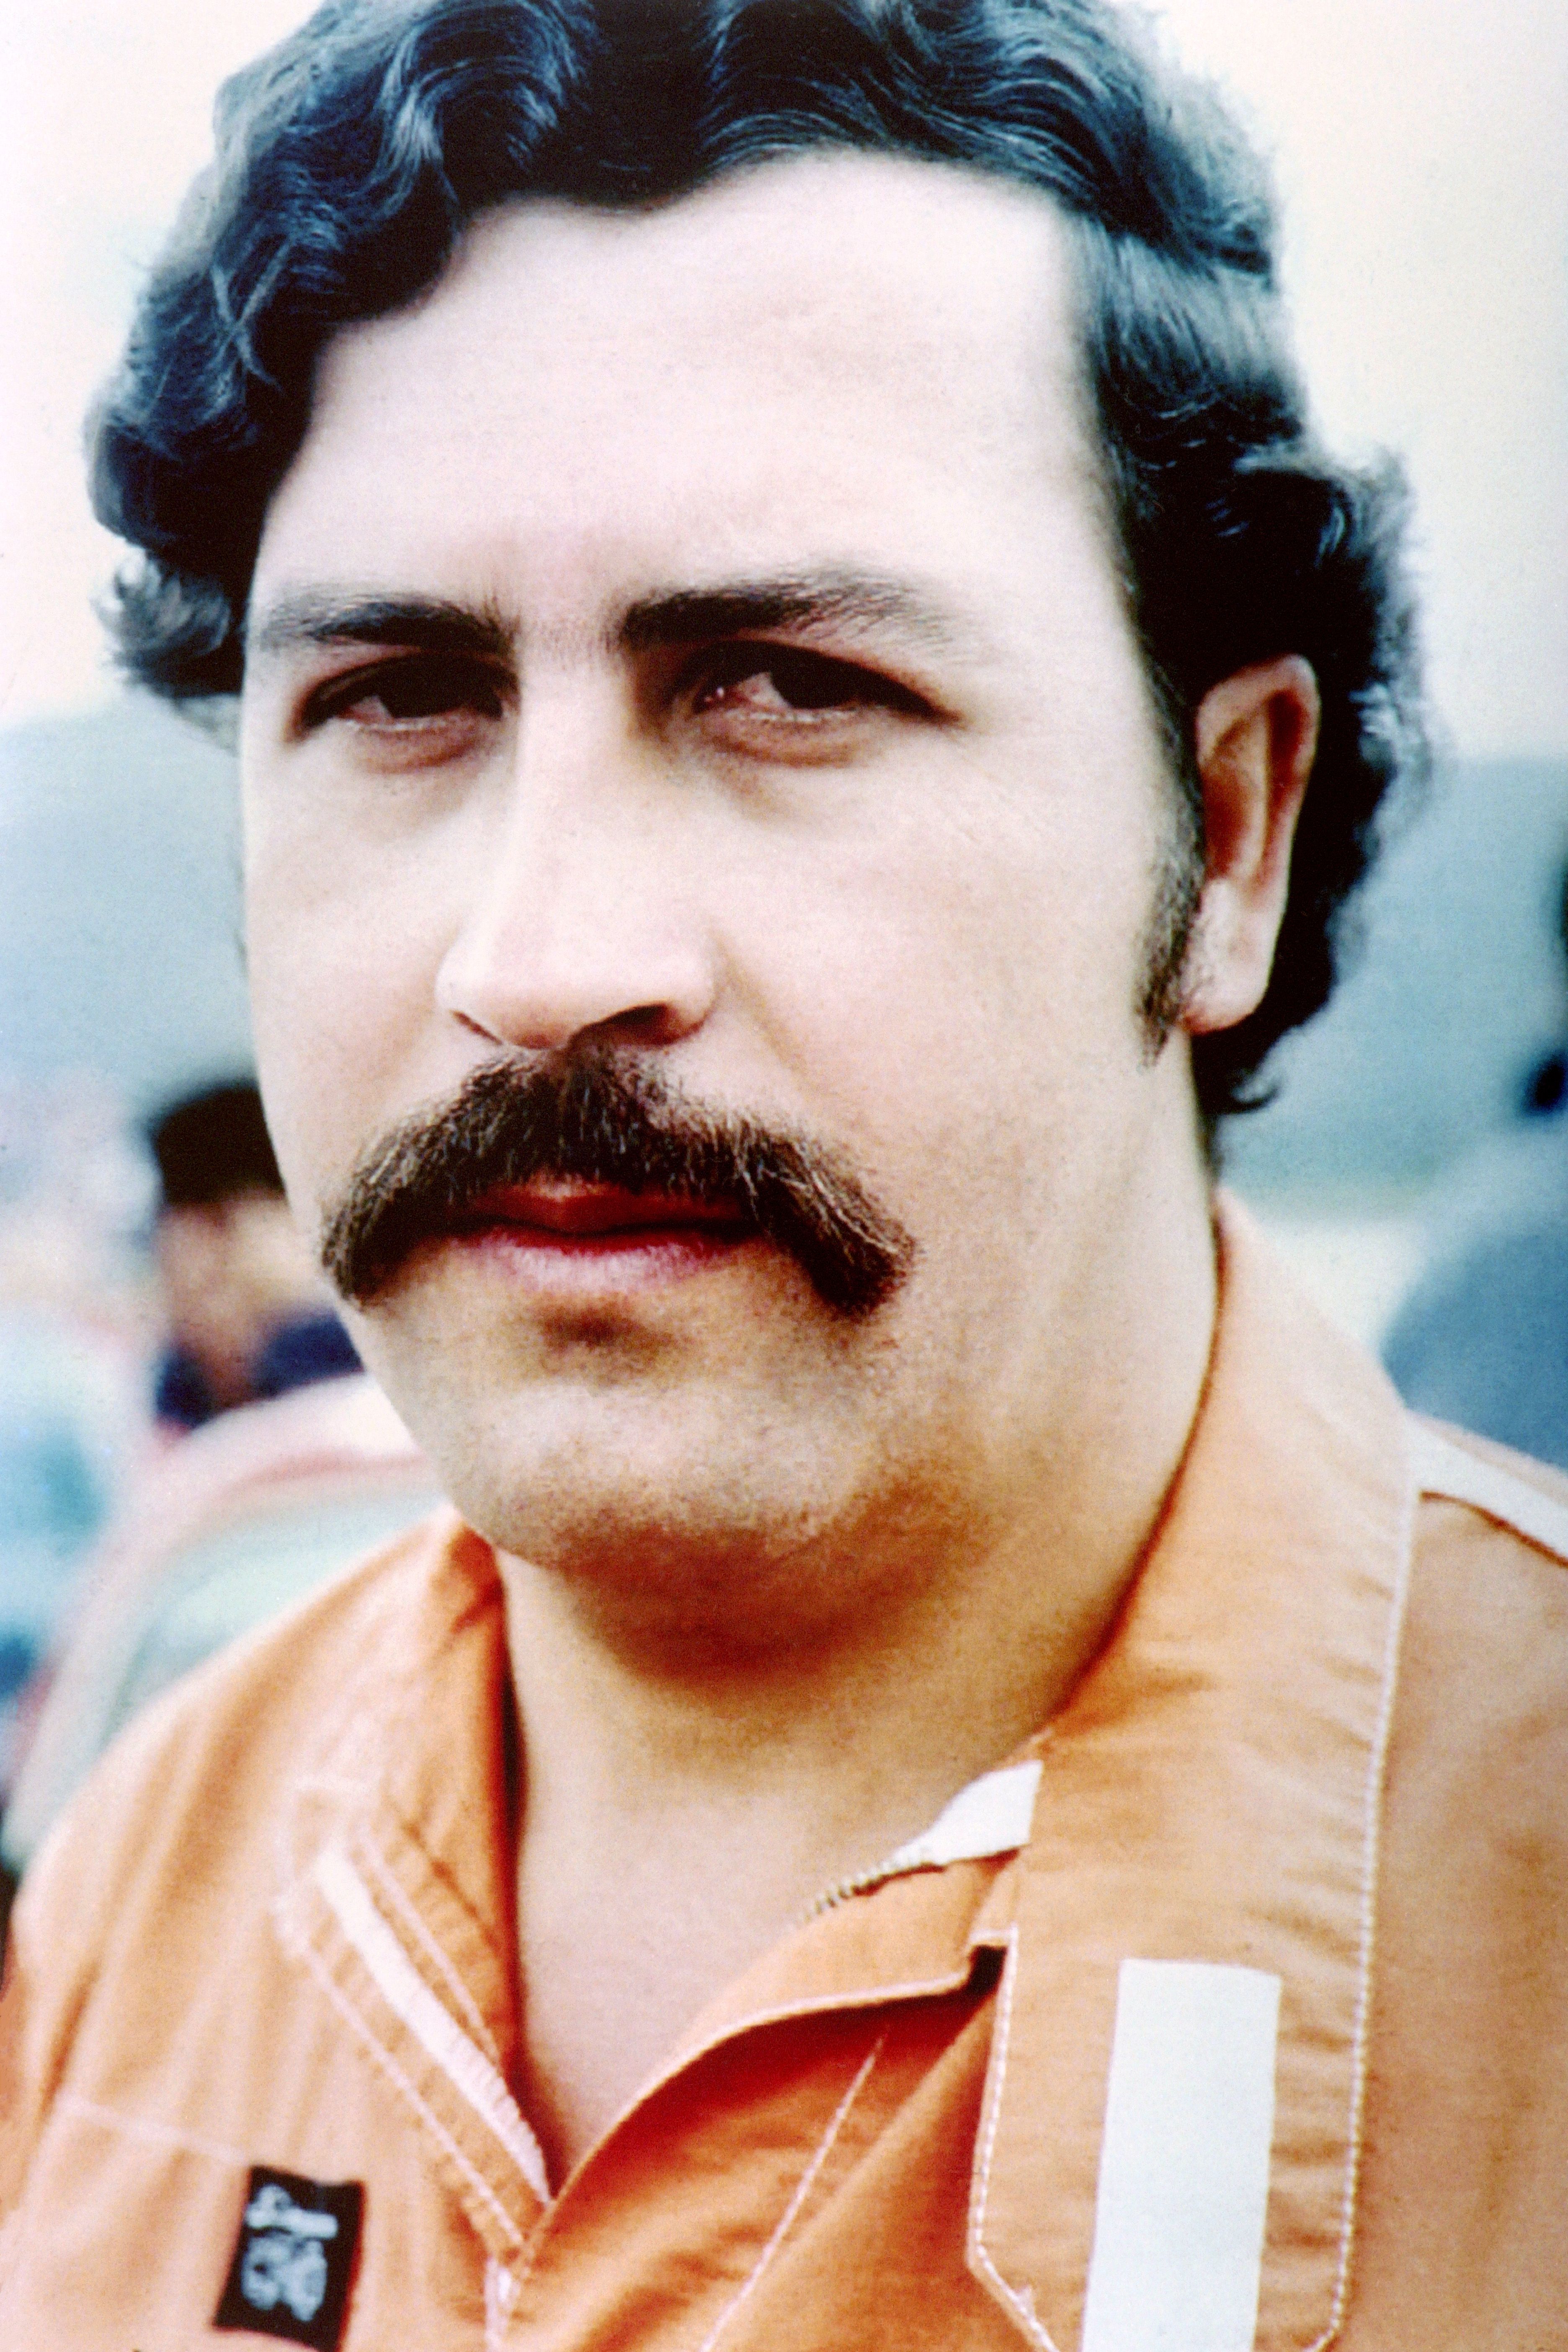 Photo of Pablo Escobar at the Envigado Prison | Source: Getty Images